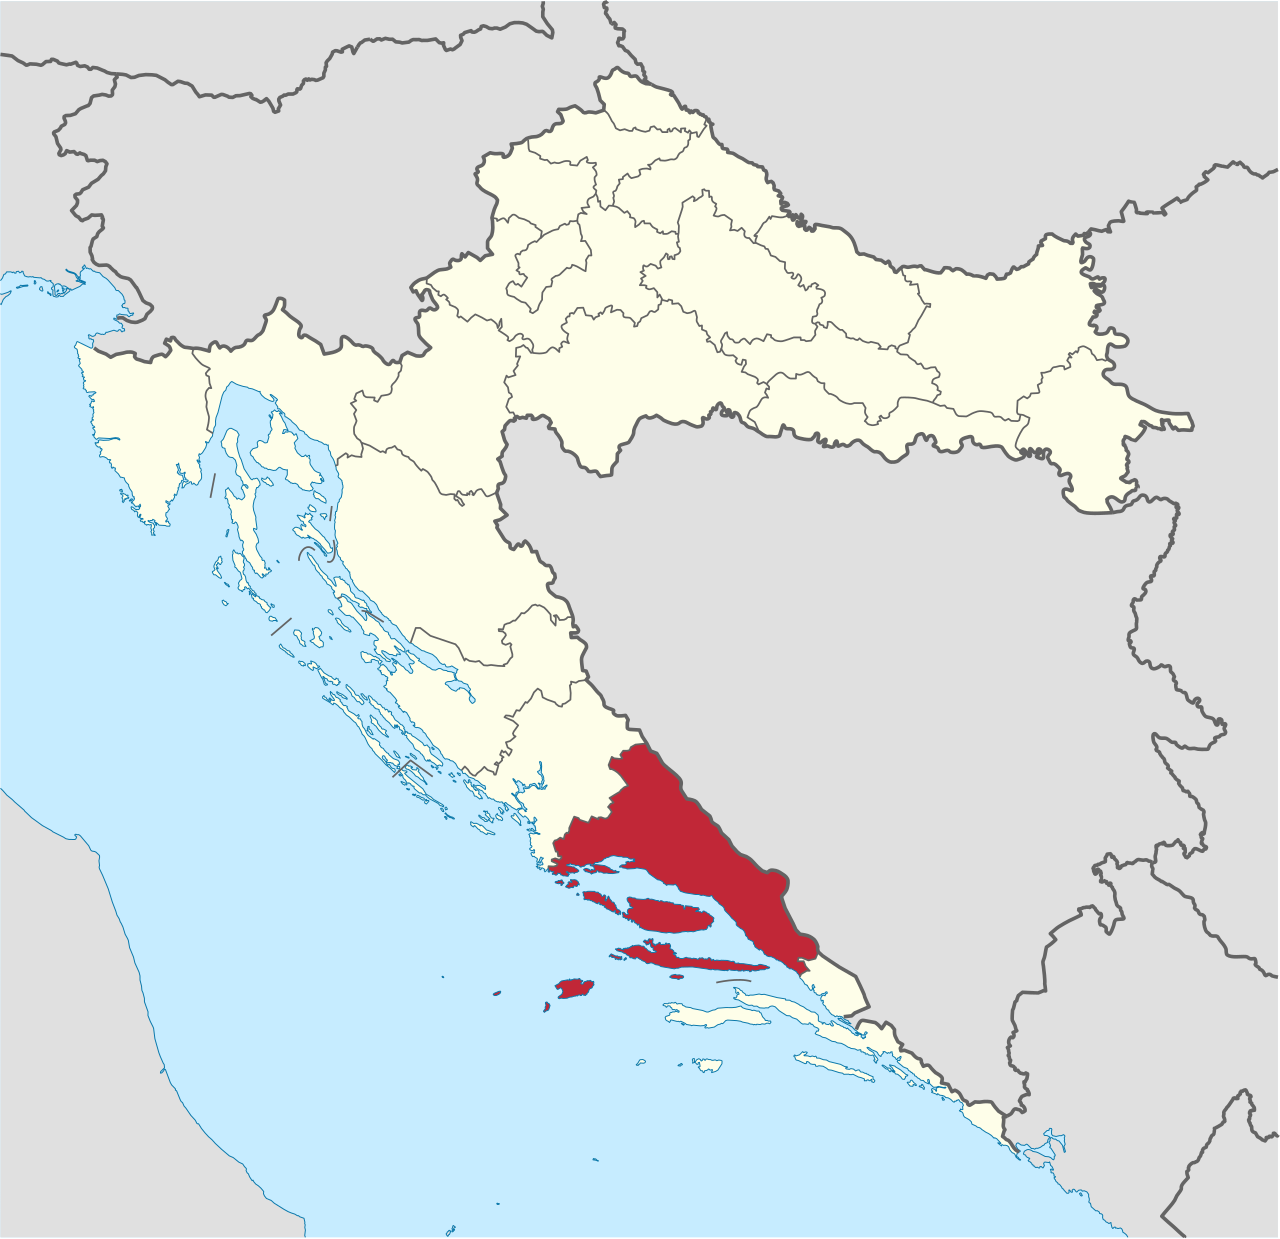 Underground Of War Urbex location or around the region Splitsko-dalmatinska županija (Općina Vis), Croatia